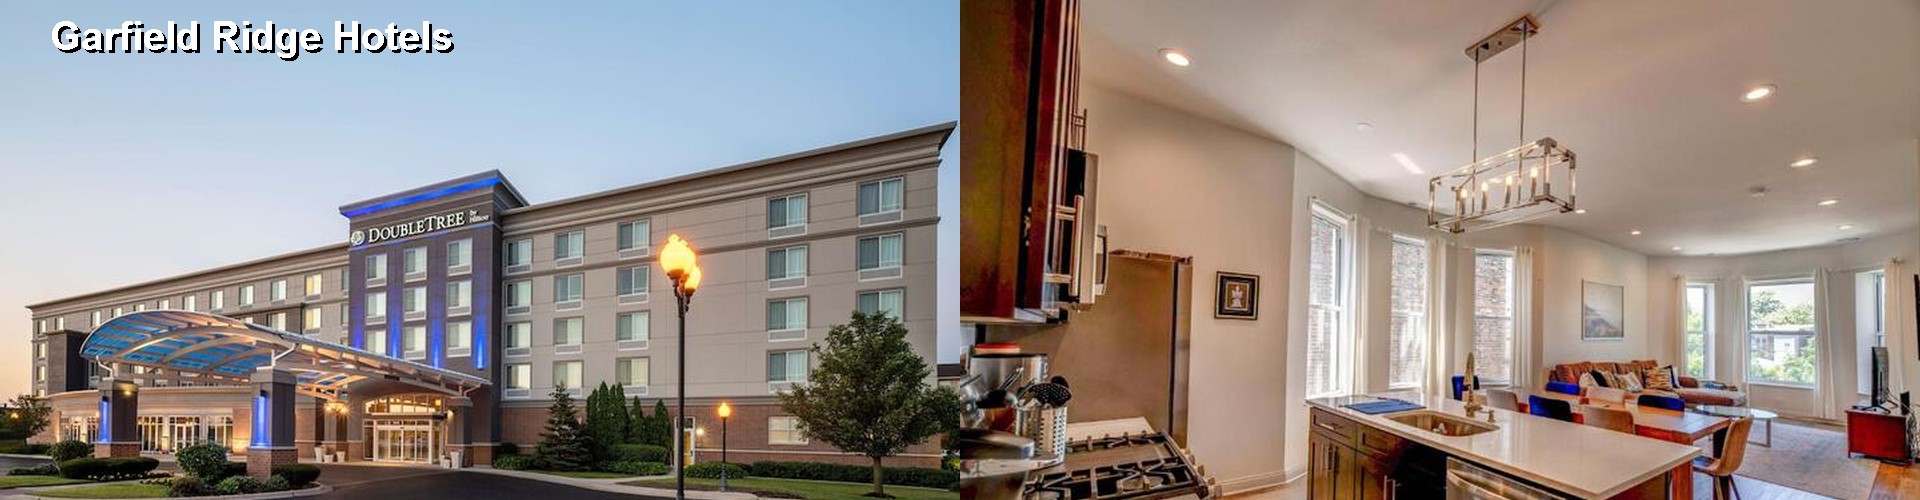 5 Best Hotels near Garfield Ridge